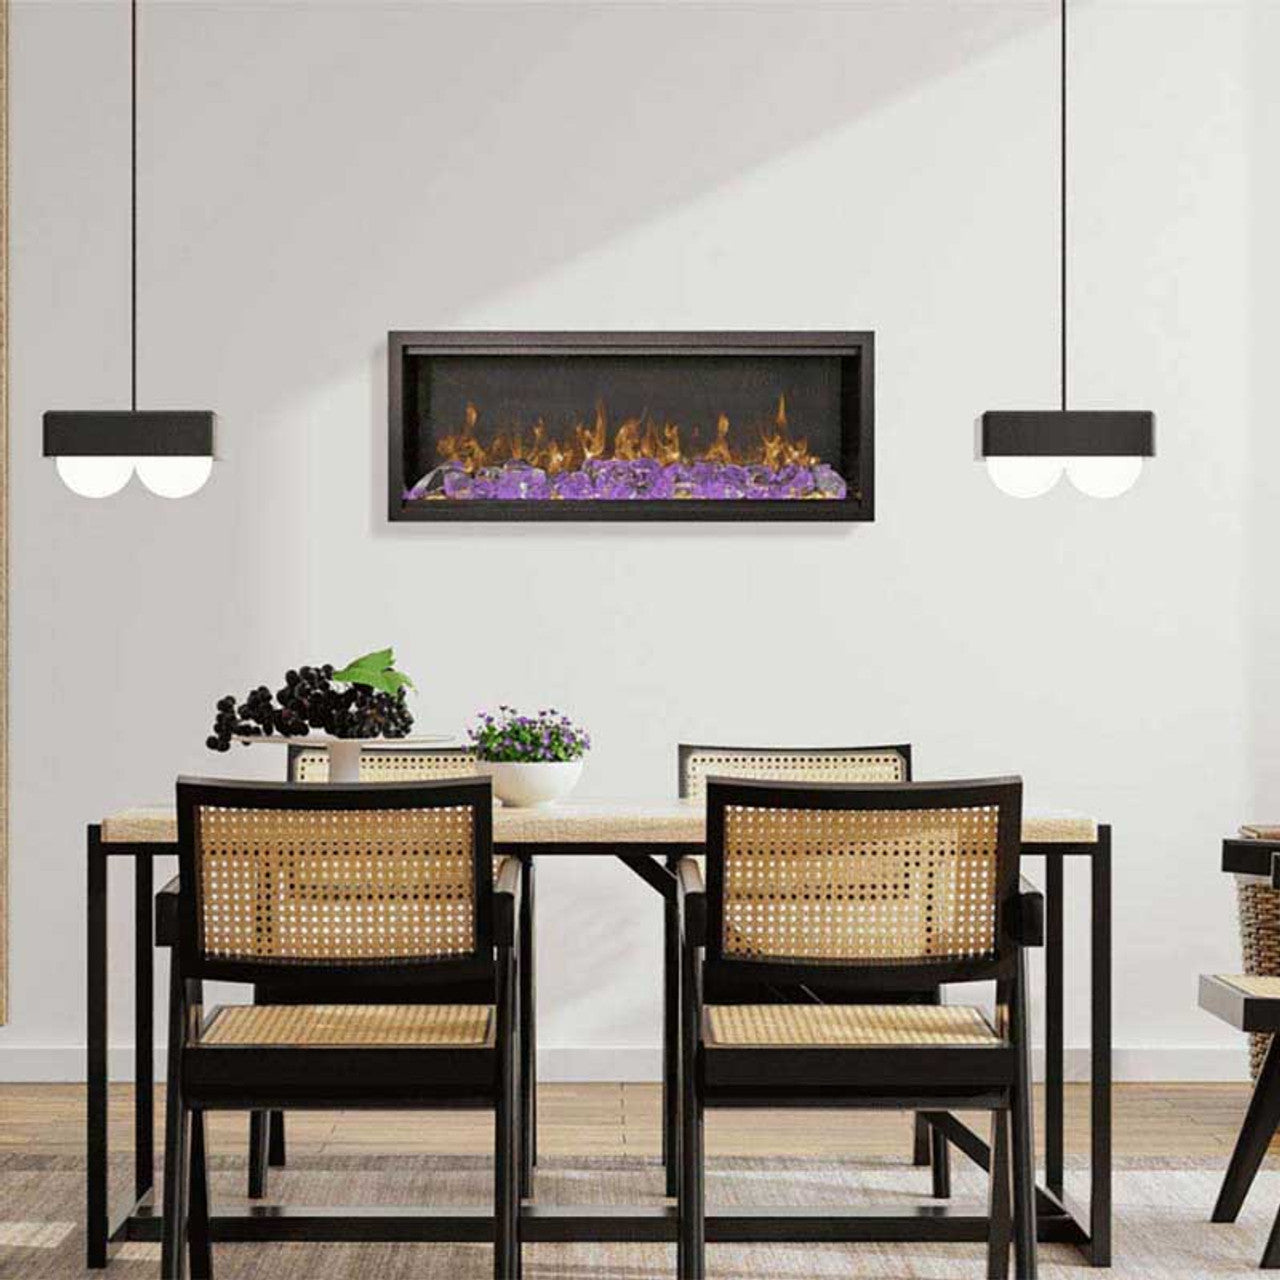 Amantii Symmetry Bespoke XT 50" Smart Electric Fireplace - SYM-50-XT-BESPOKE - Chimney Cricket